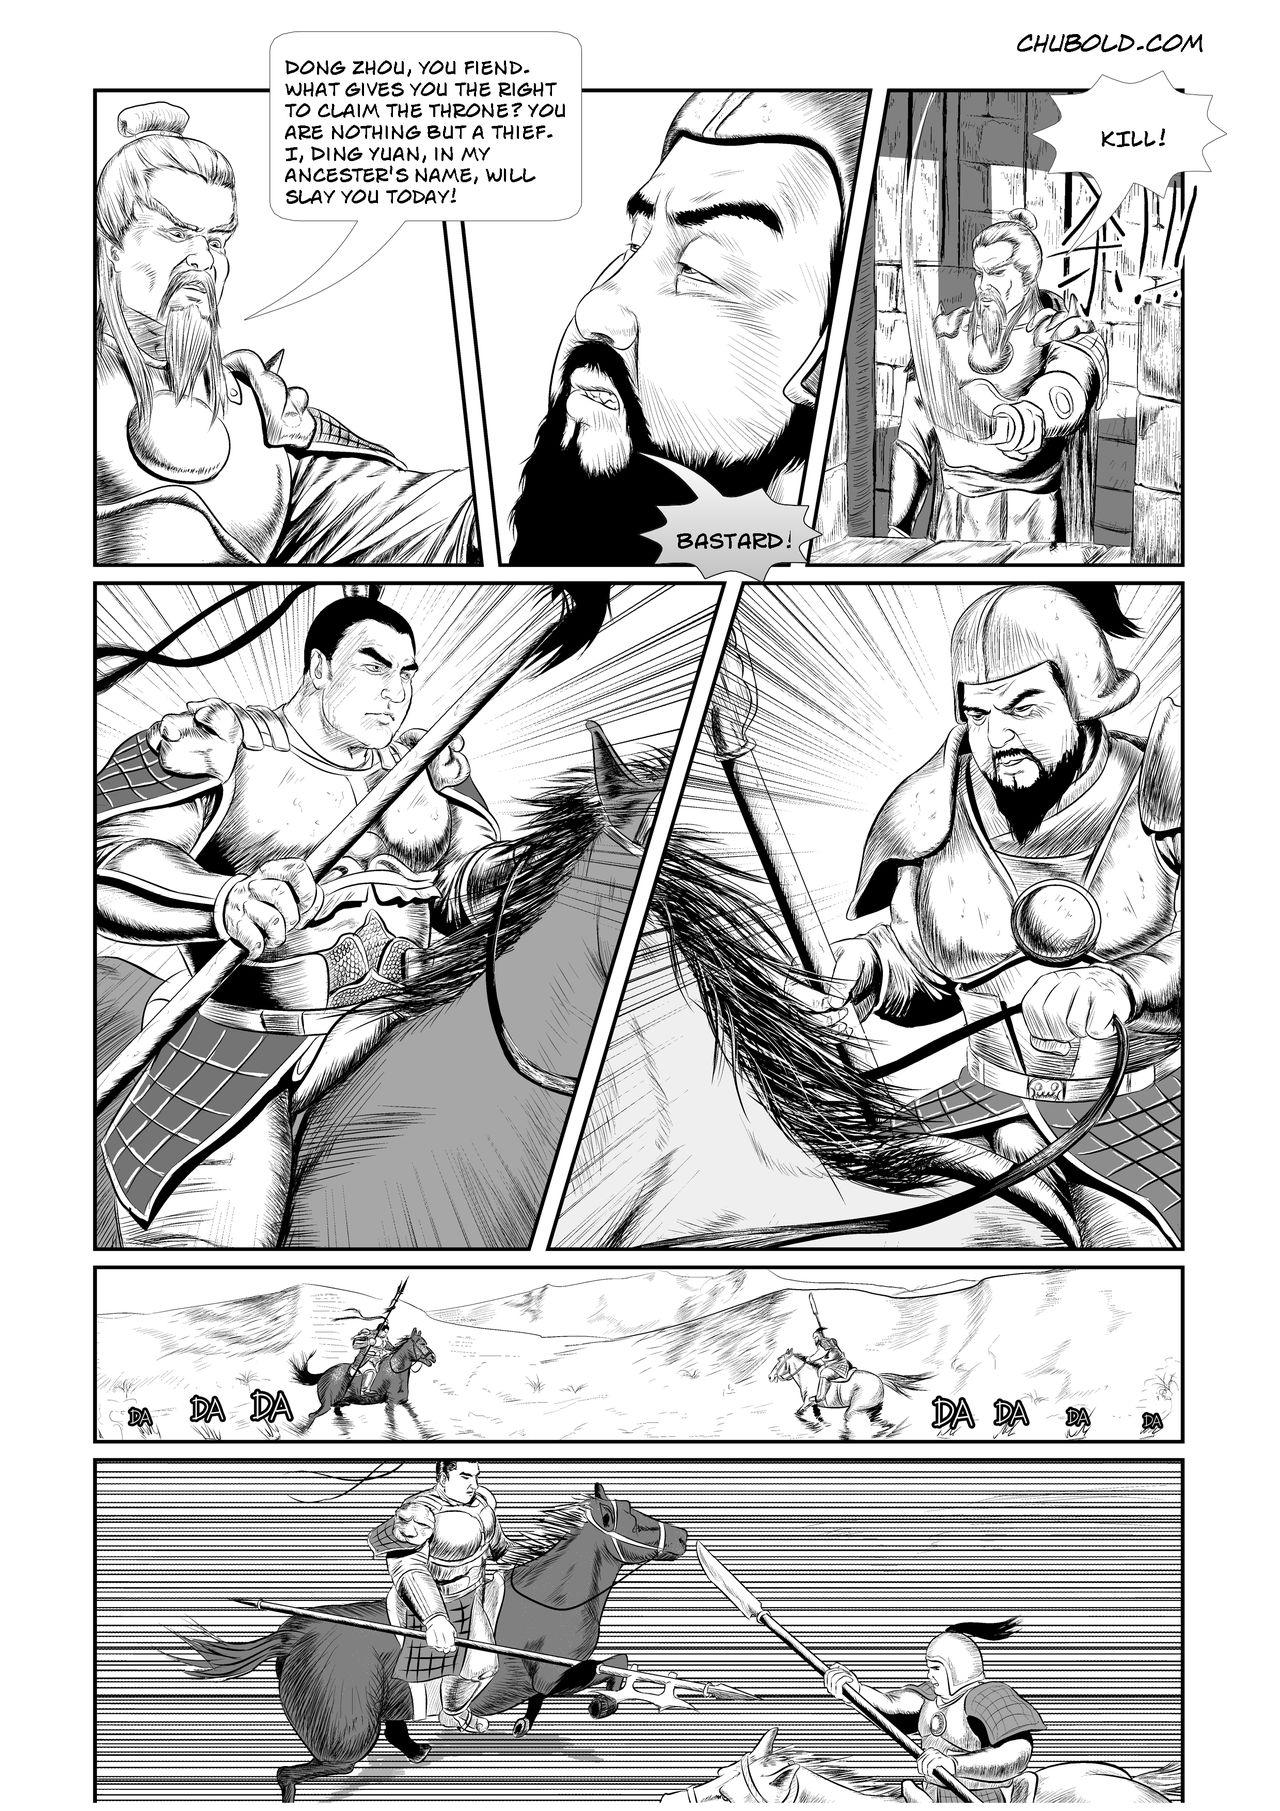 Culo Dong Zuho 1 Nuru - Page 11